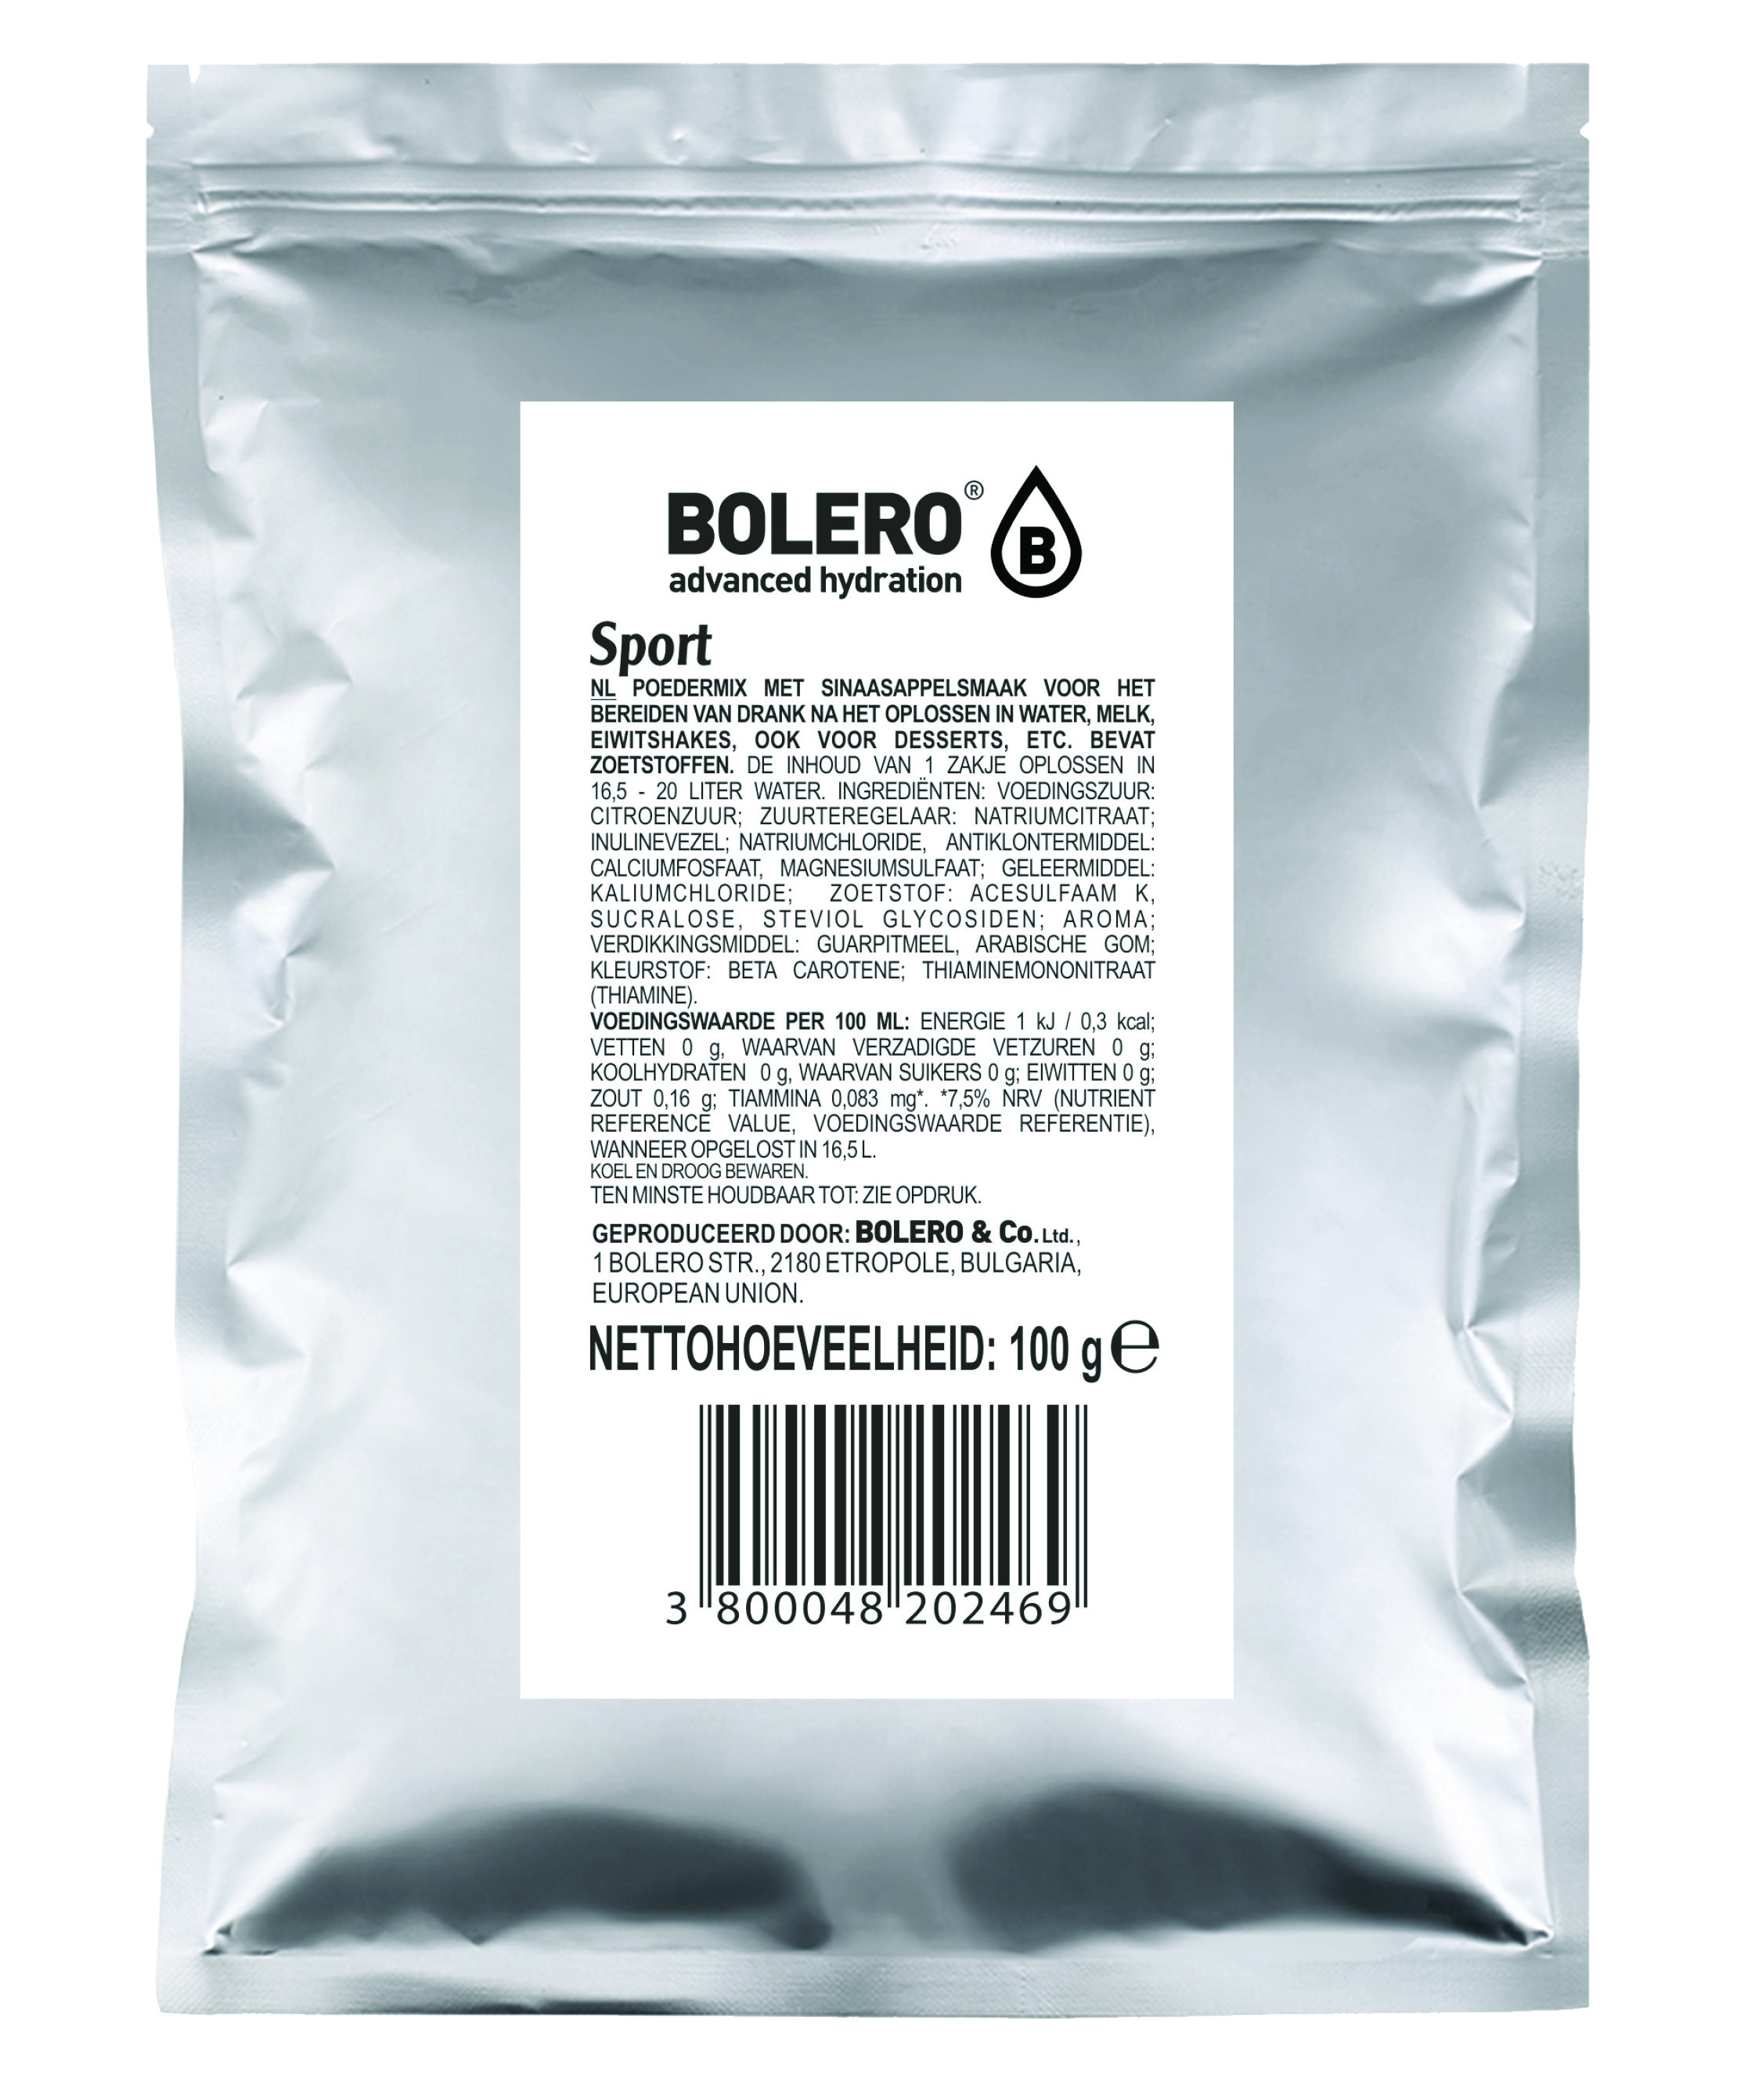 bolero sport 20 liter (1 x 100g) - Your Official BOLERO Drink